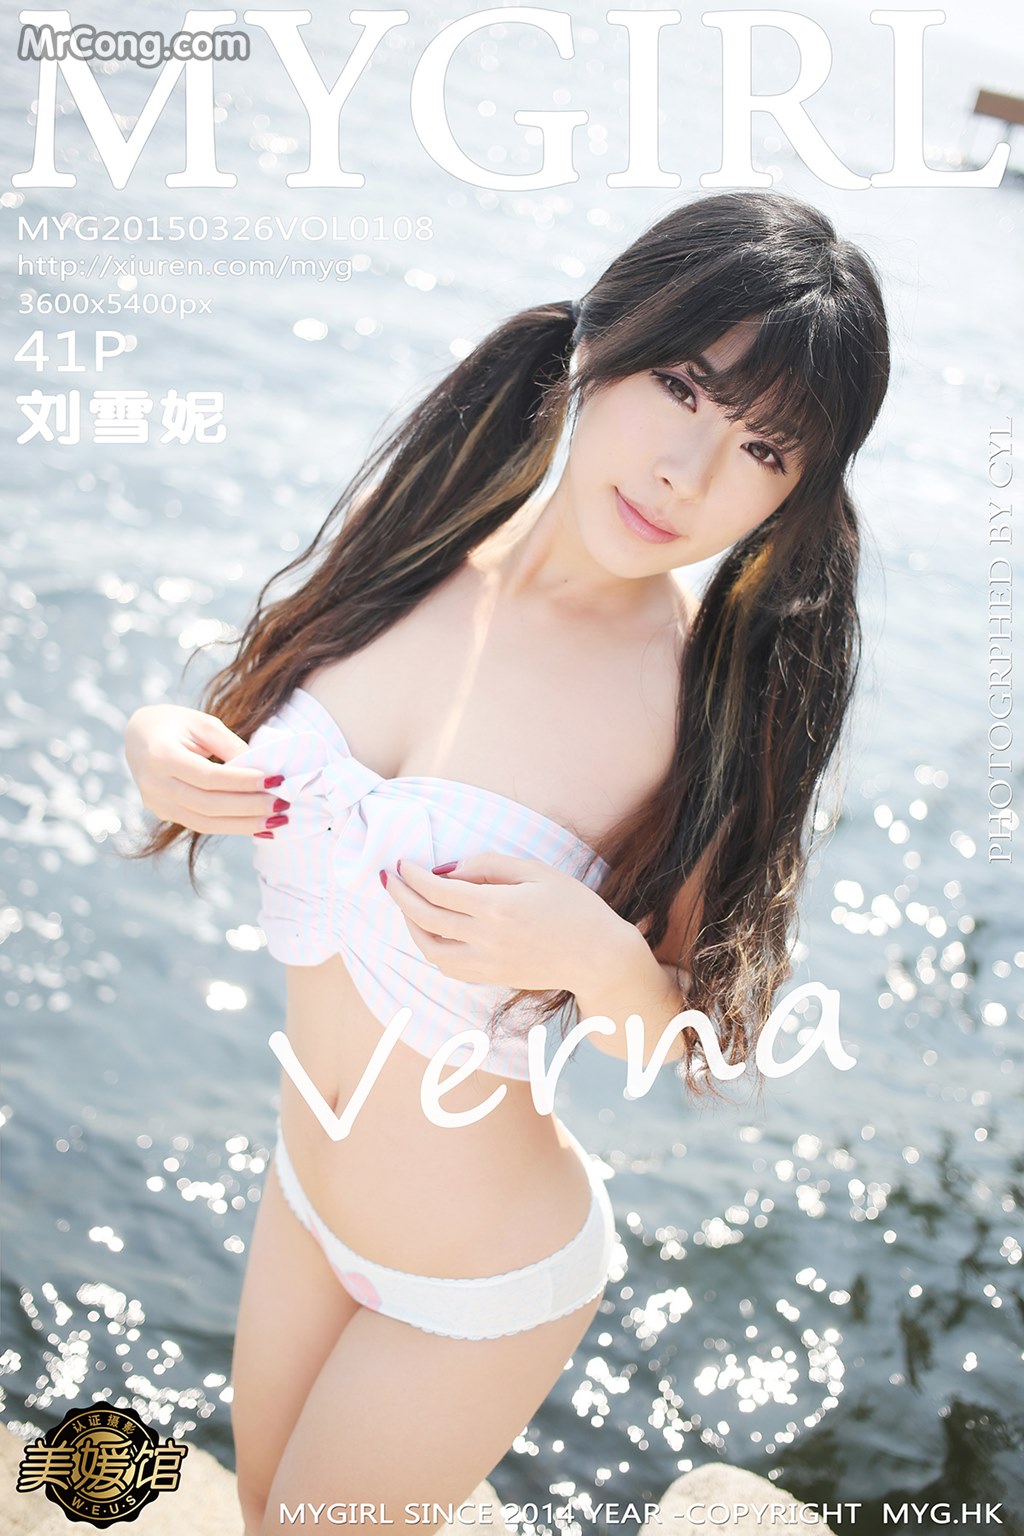 MyGirl Vol.108: Verna Model (刘雪 妮) (42 photos) photo 1-0